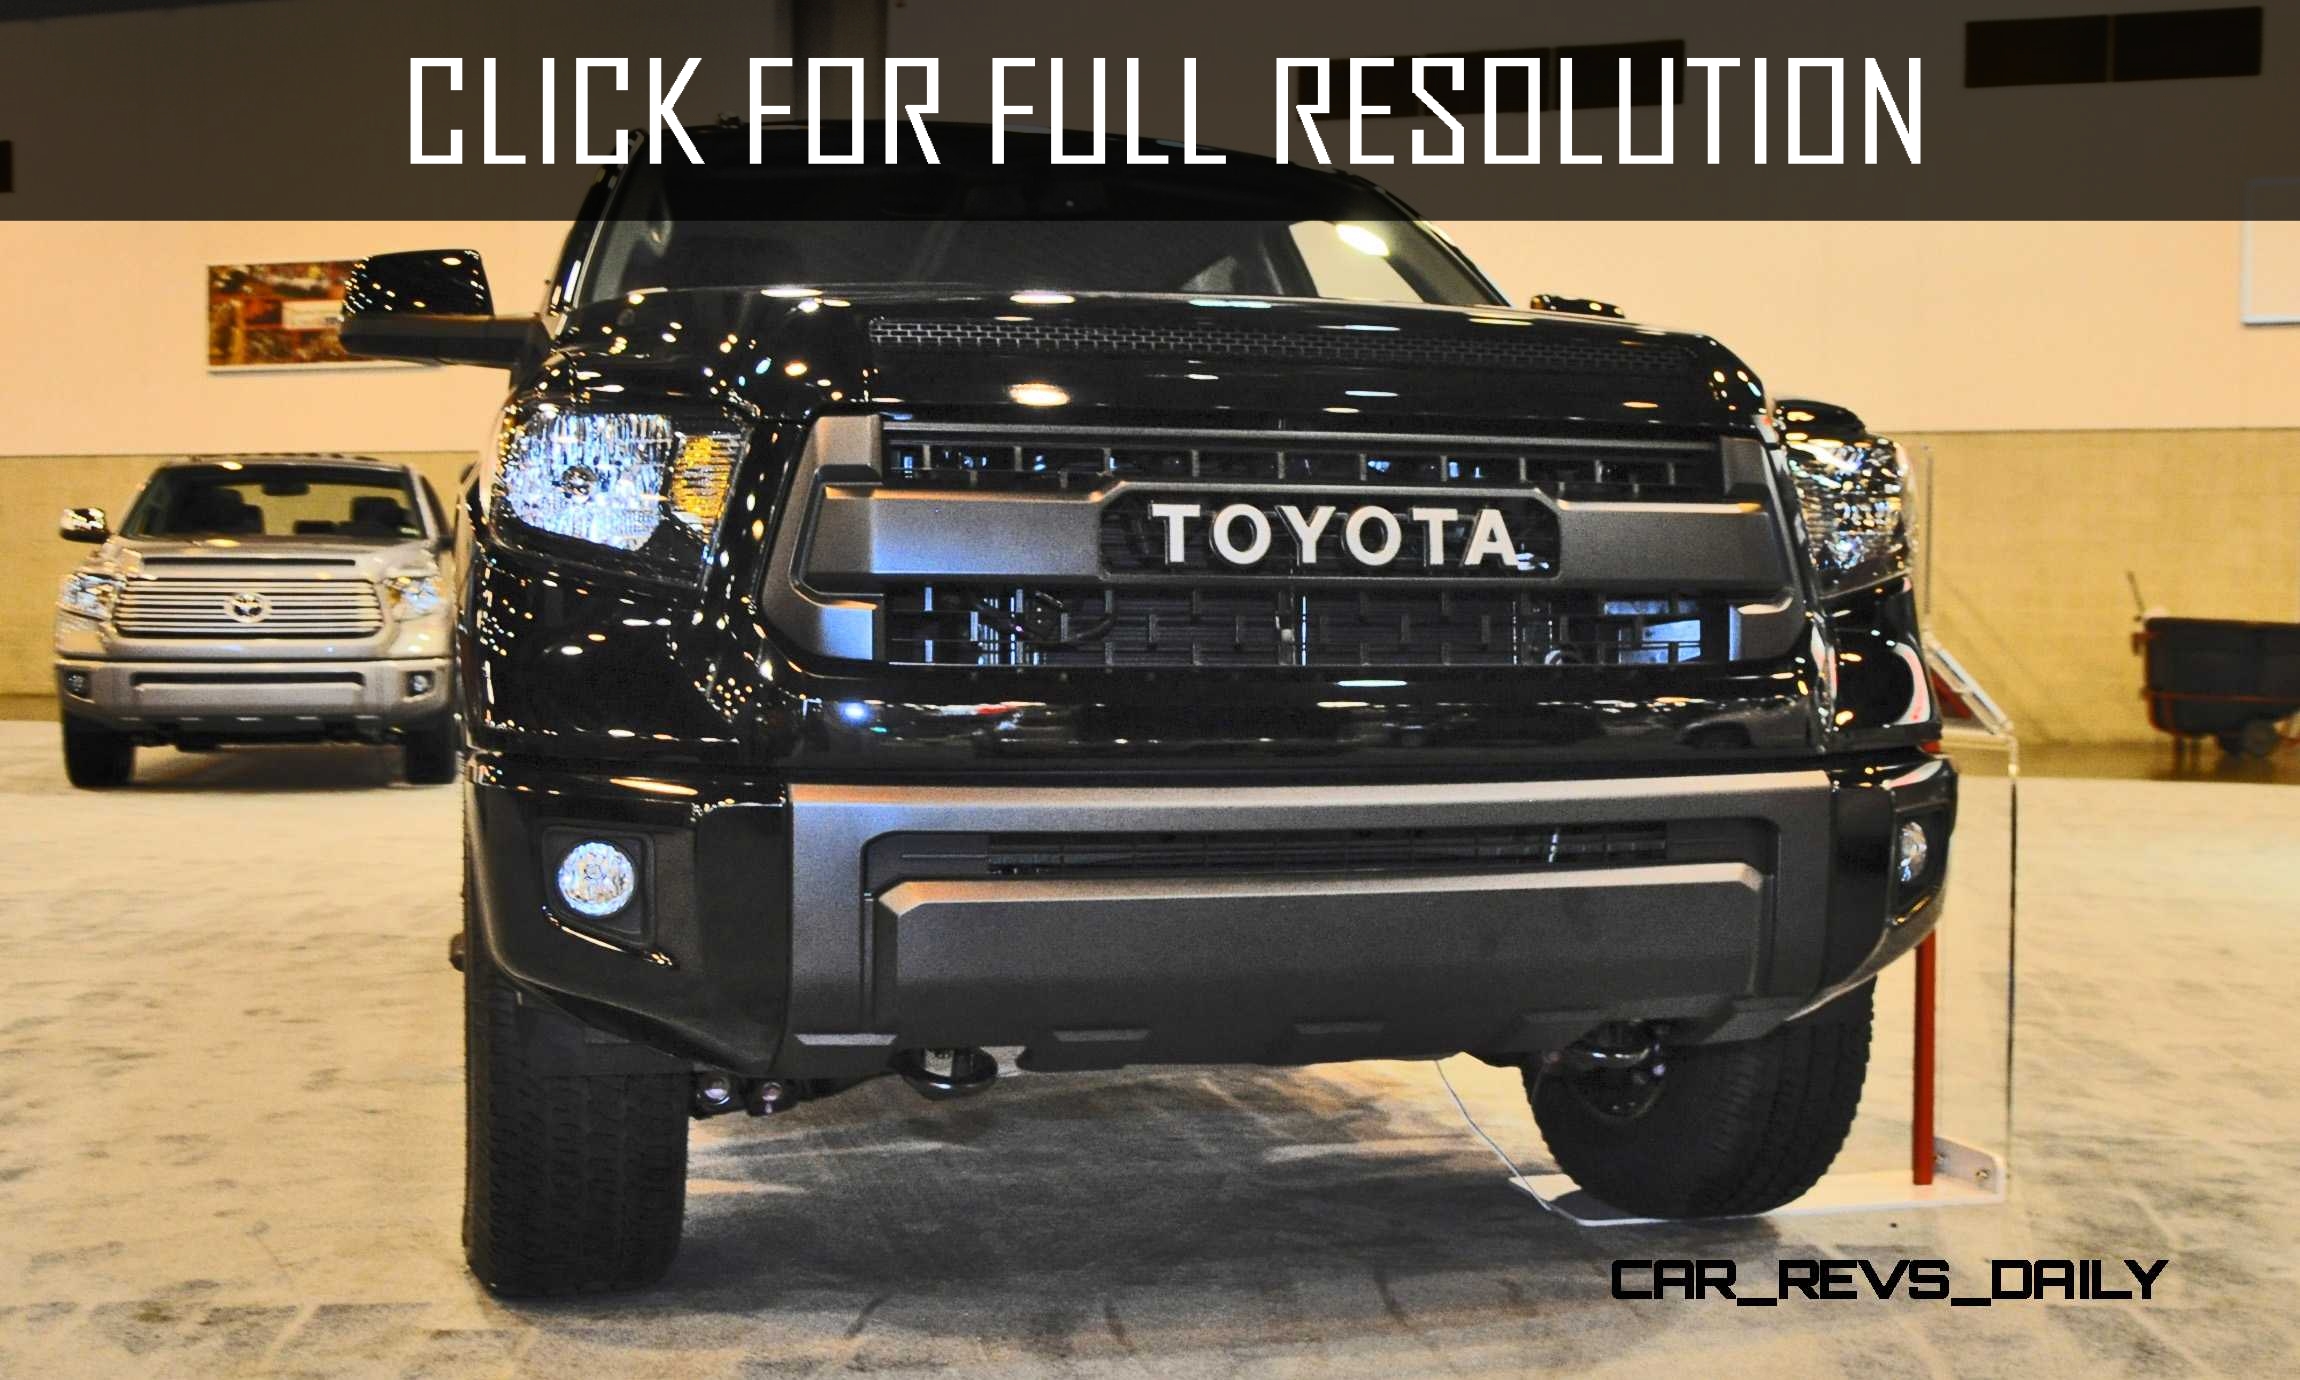 Toyota Tundra Trd Pro Black